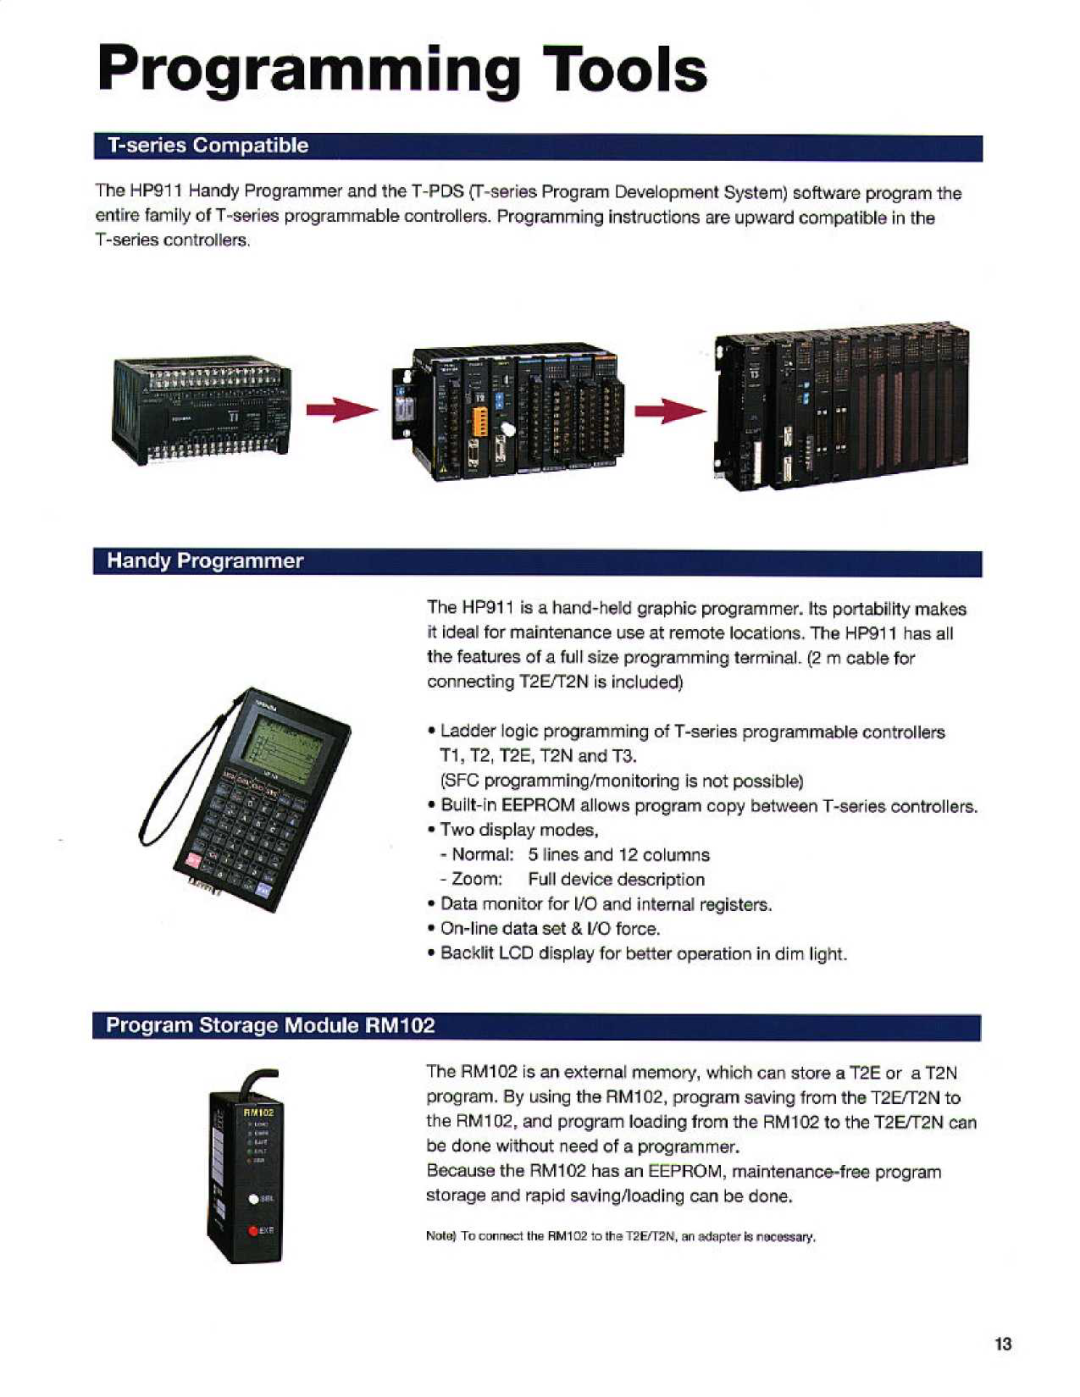 Toshiba T2E manual Programming Tools, T-series Compatible, Handy Programmer, Program Storage Module RM102 